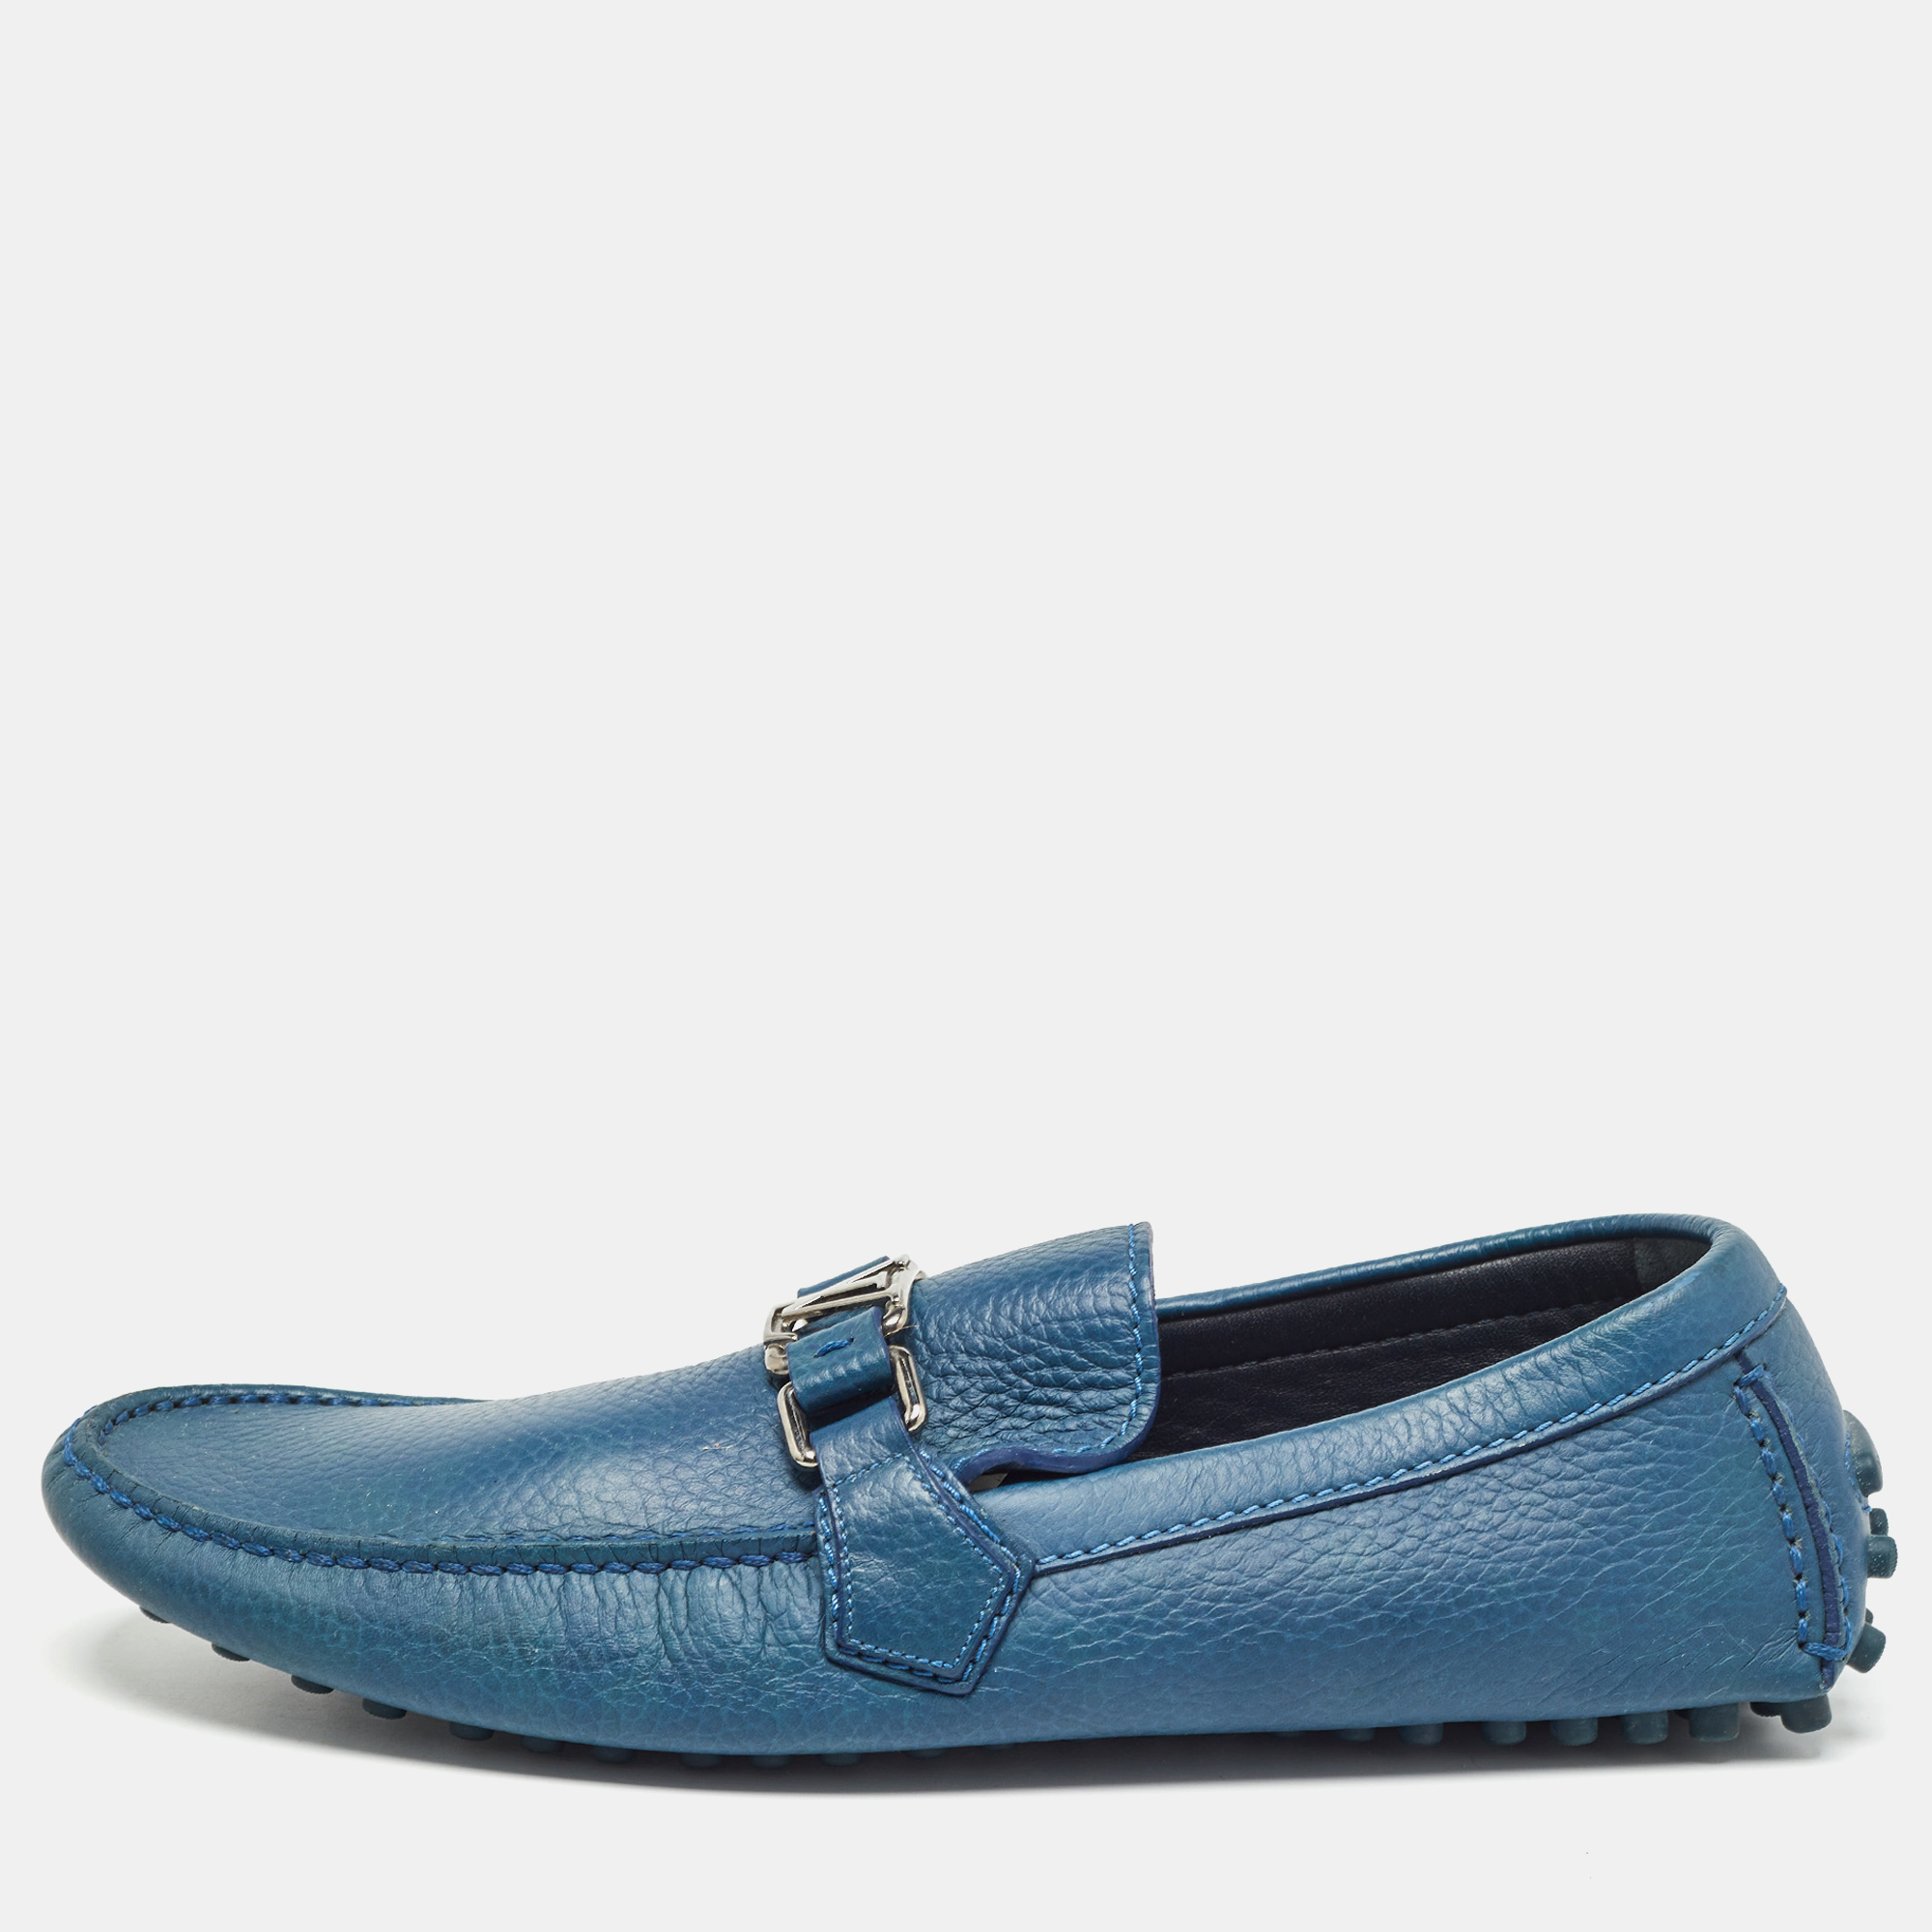 Louis vuitton blue leather hockenheim slip on loafers size 42